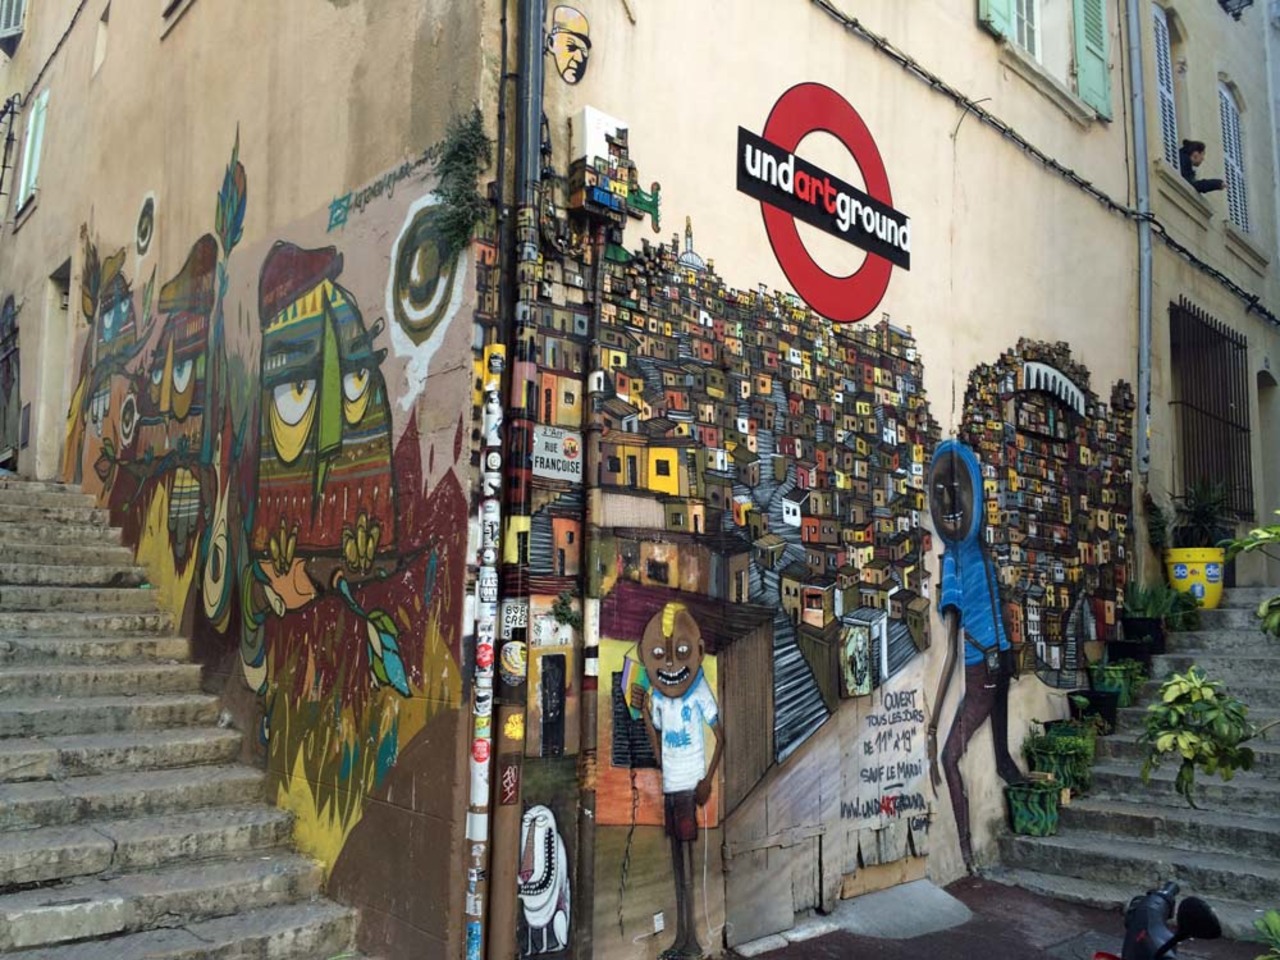 New blog post #Marseille #streetart #graffiti #art South of #France http://allotment2kitchen.blogspot.co.uk/2015/10/marseille-street-graffiti-art.html https://t.co/N3wjitUckb